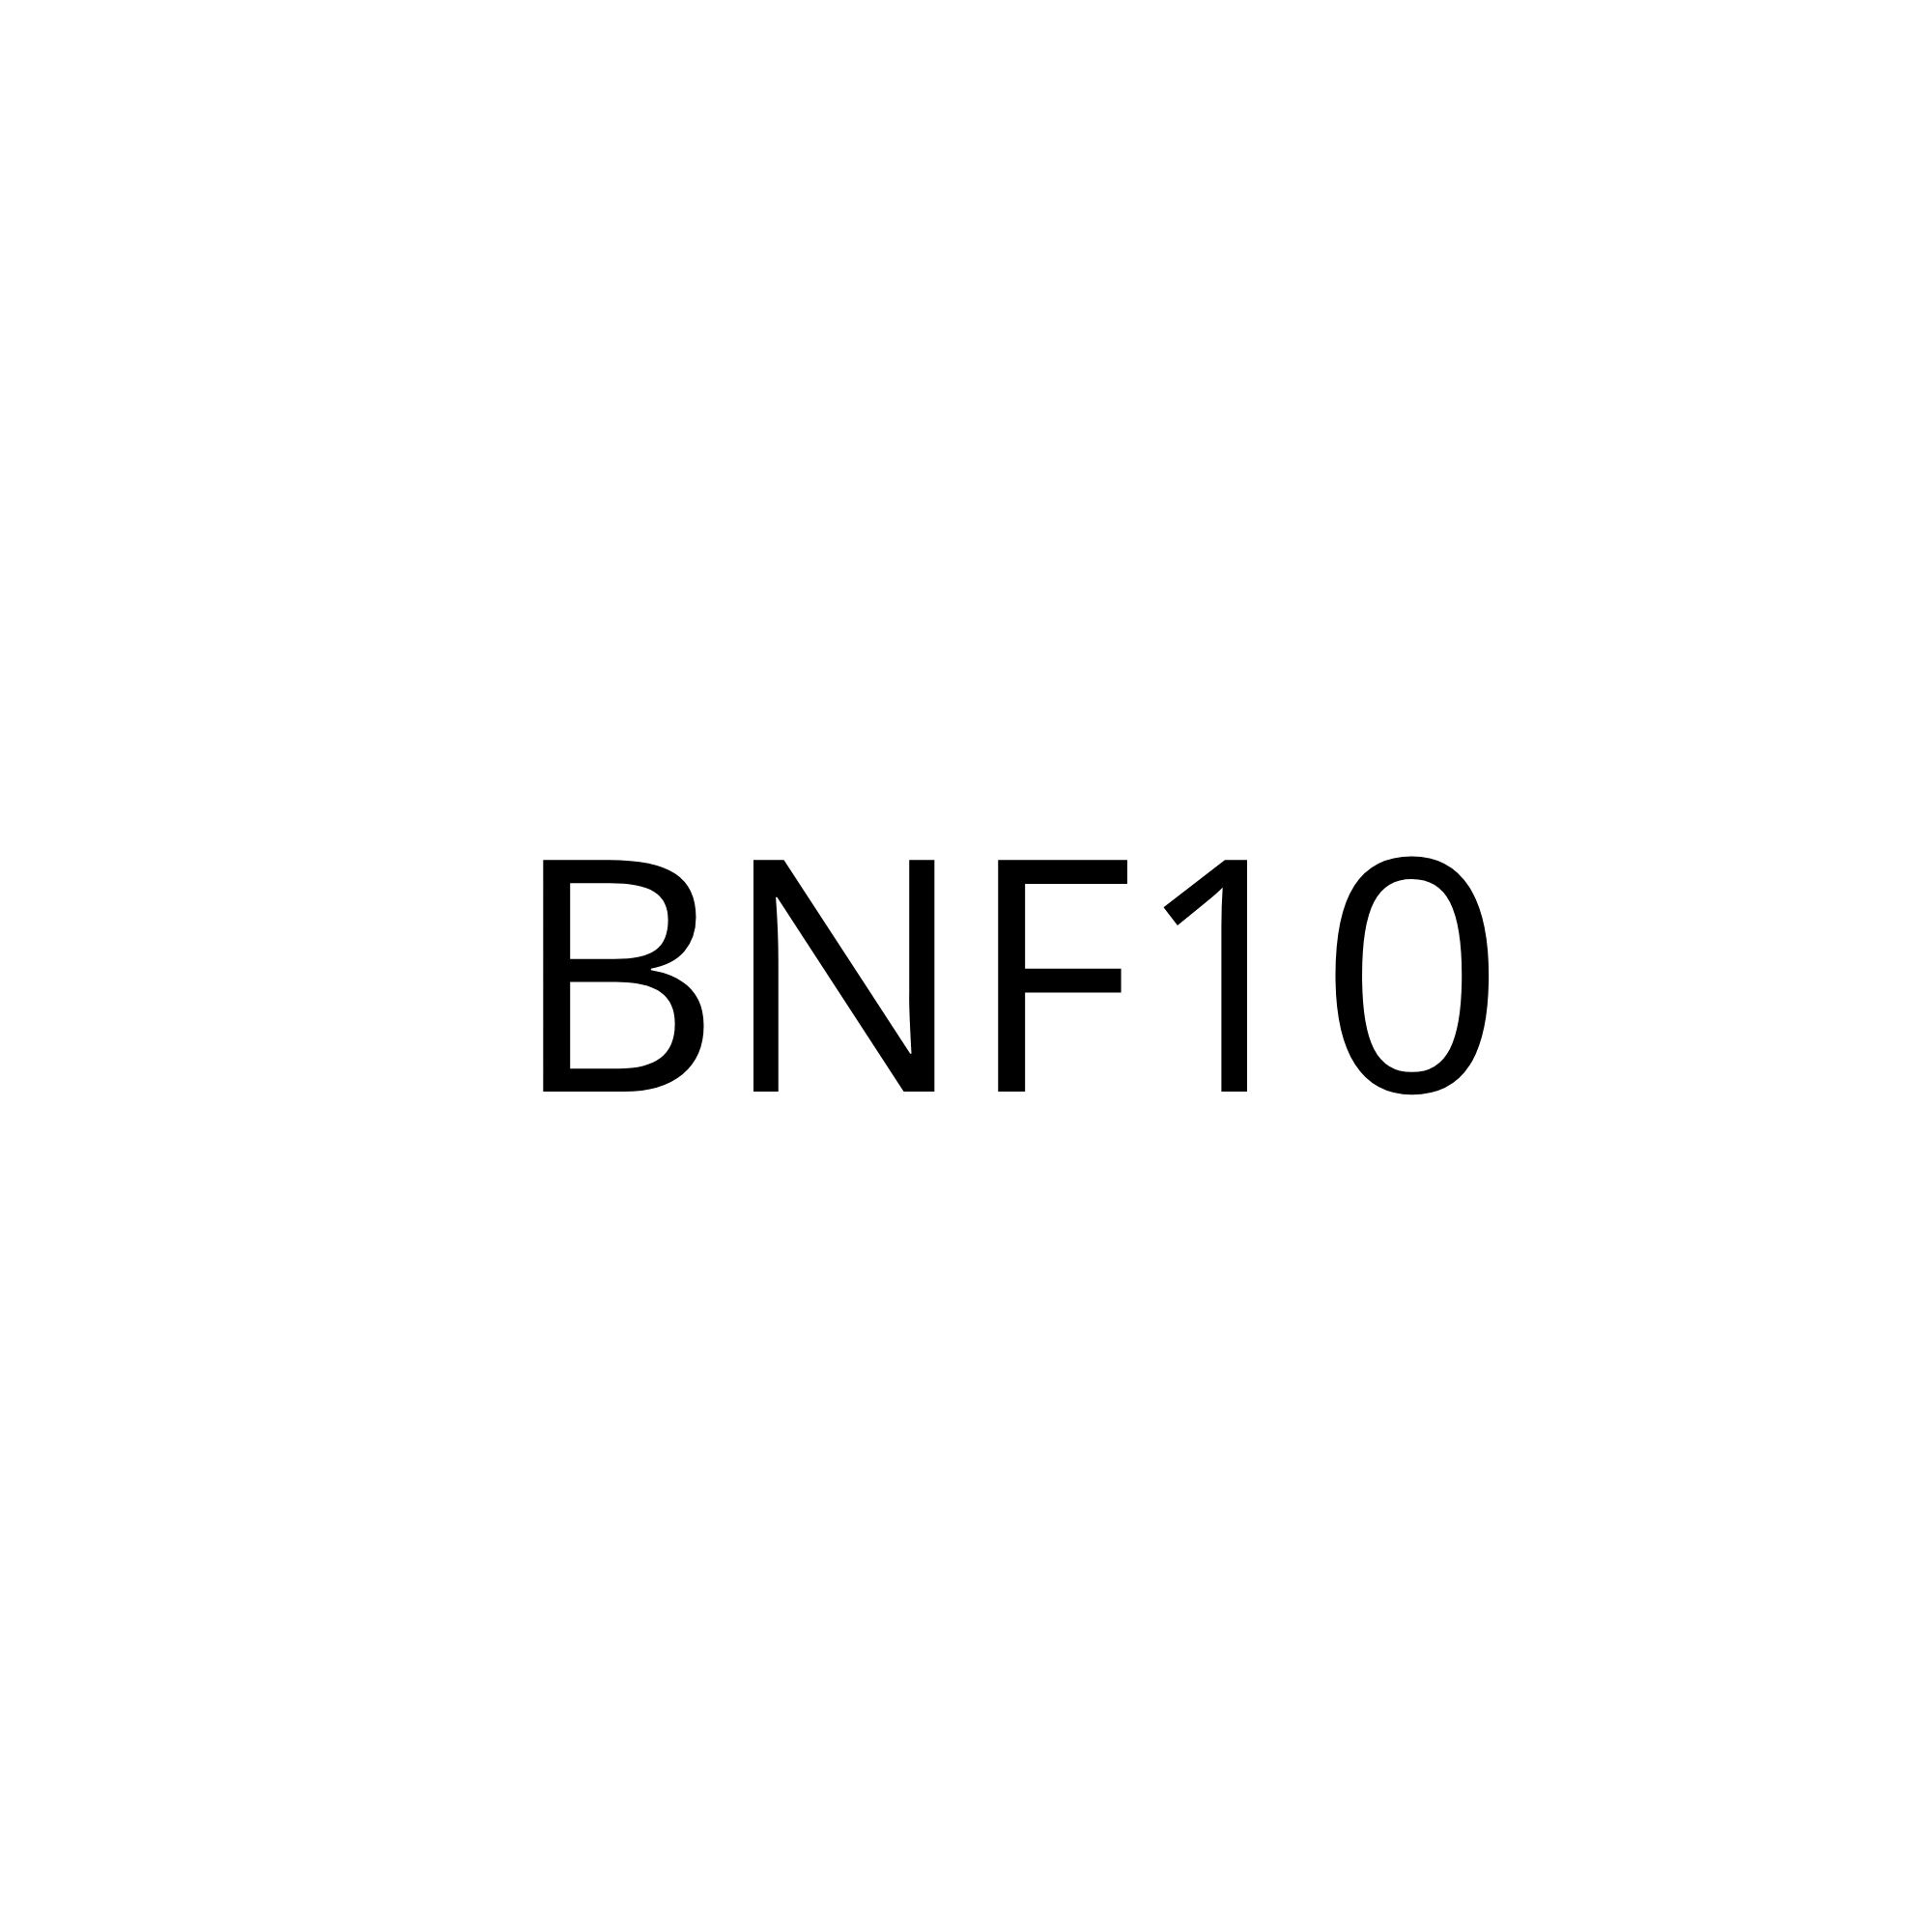 Bnf 10